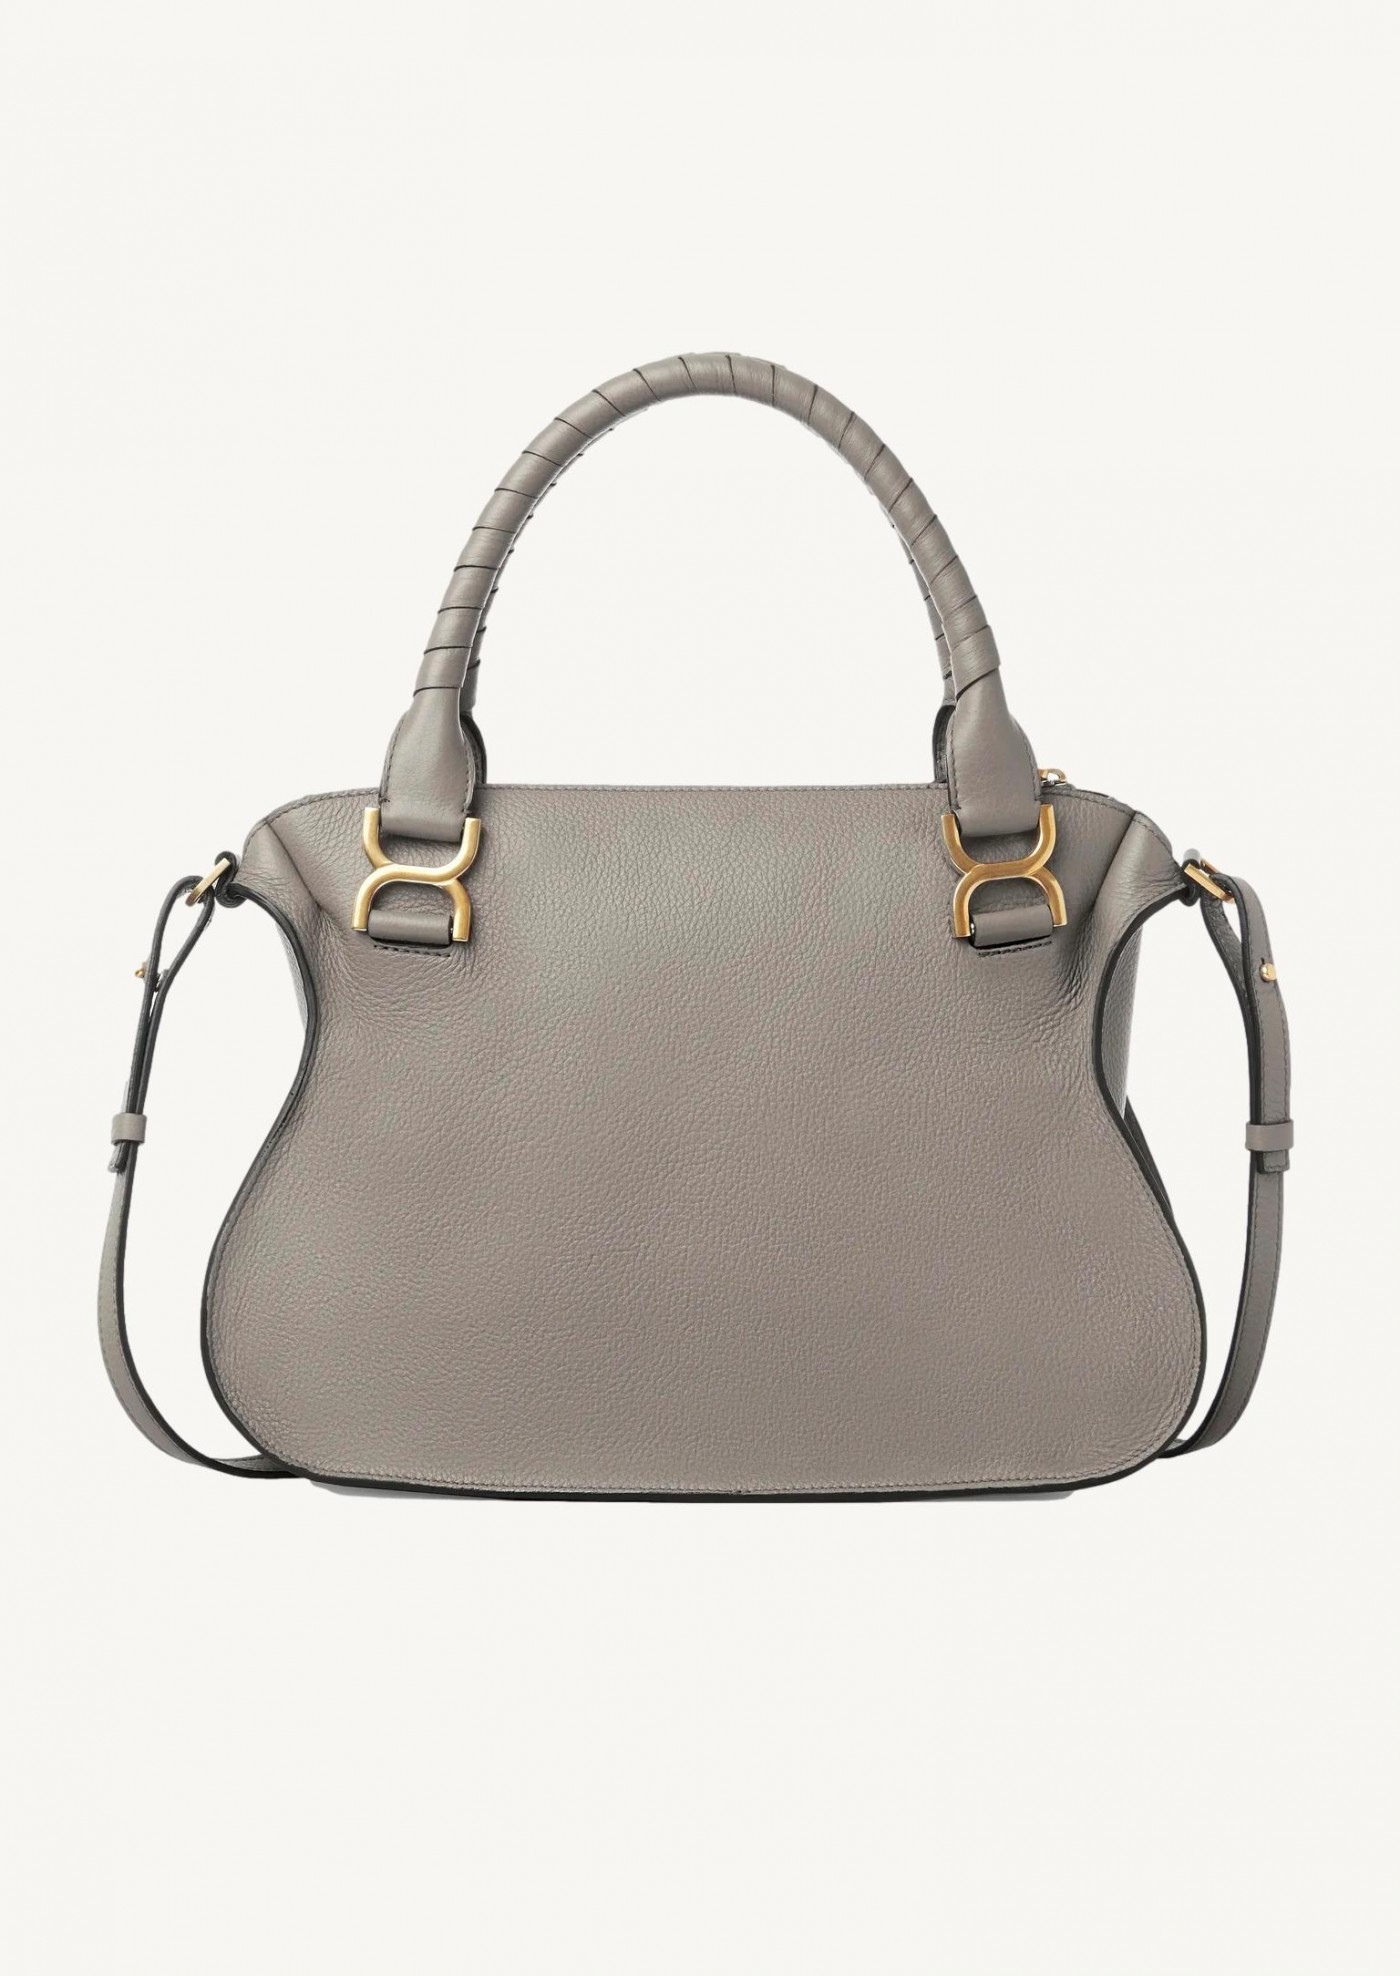 Large handbag marcie grey